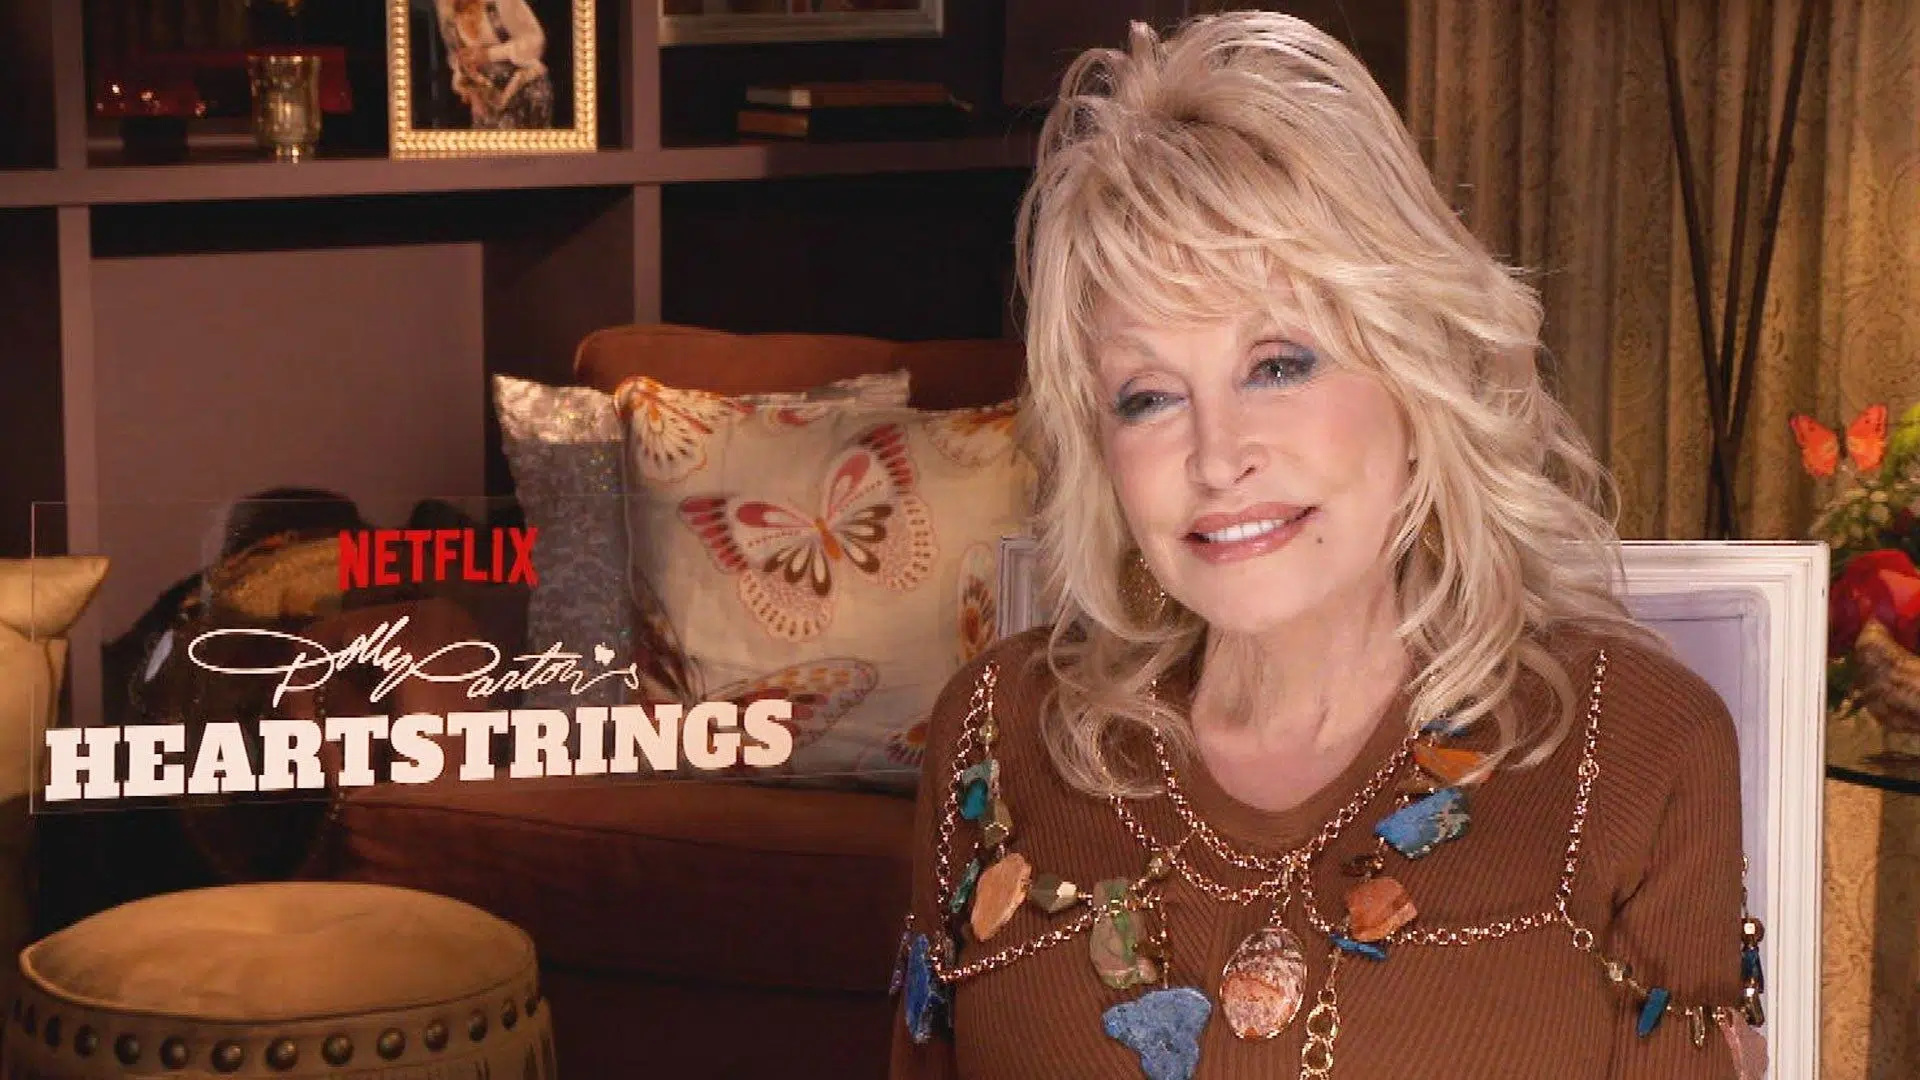 Check out Dolly Parton's "Heartstrings" Trailer